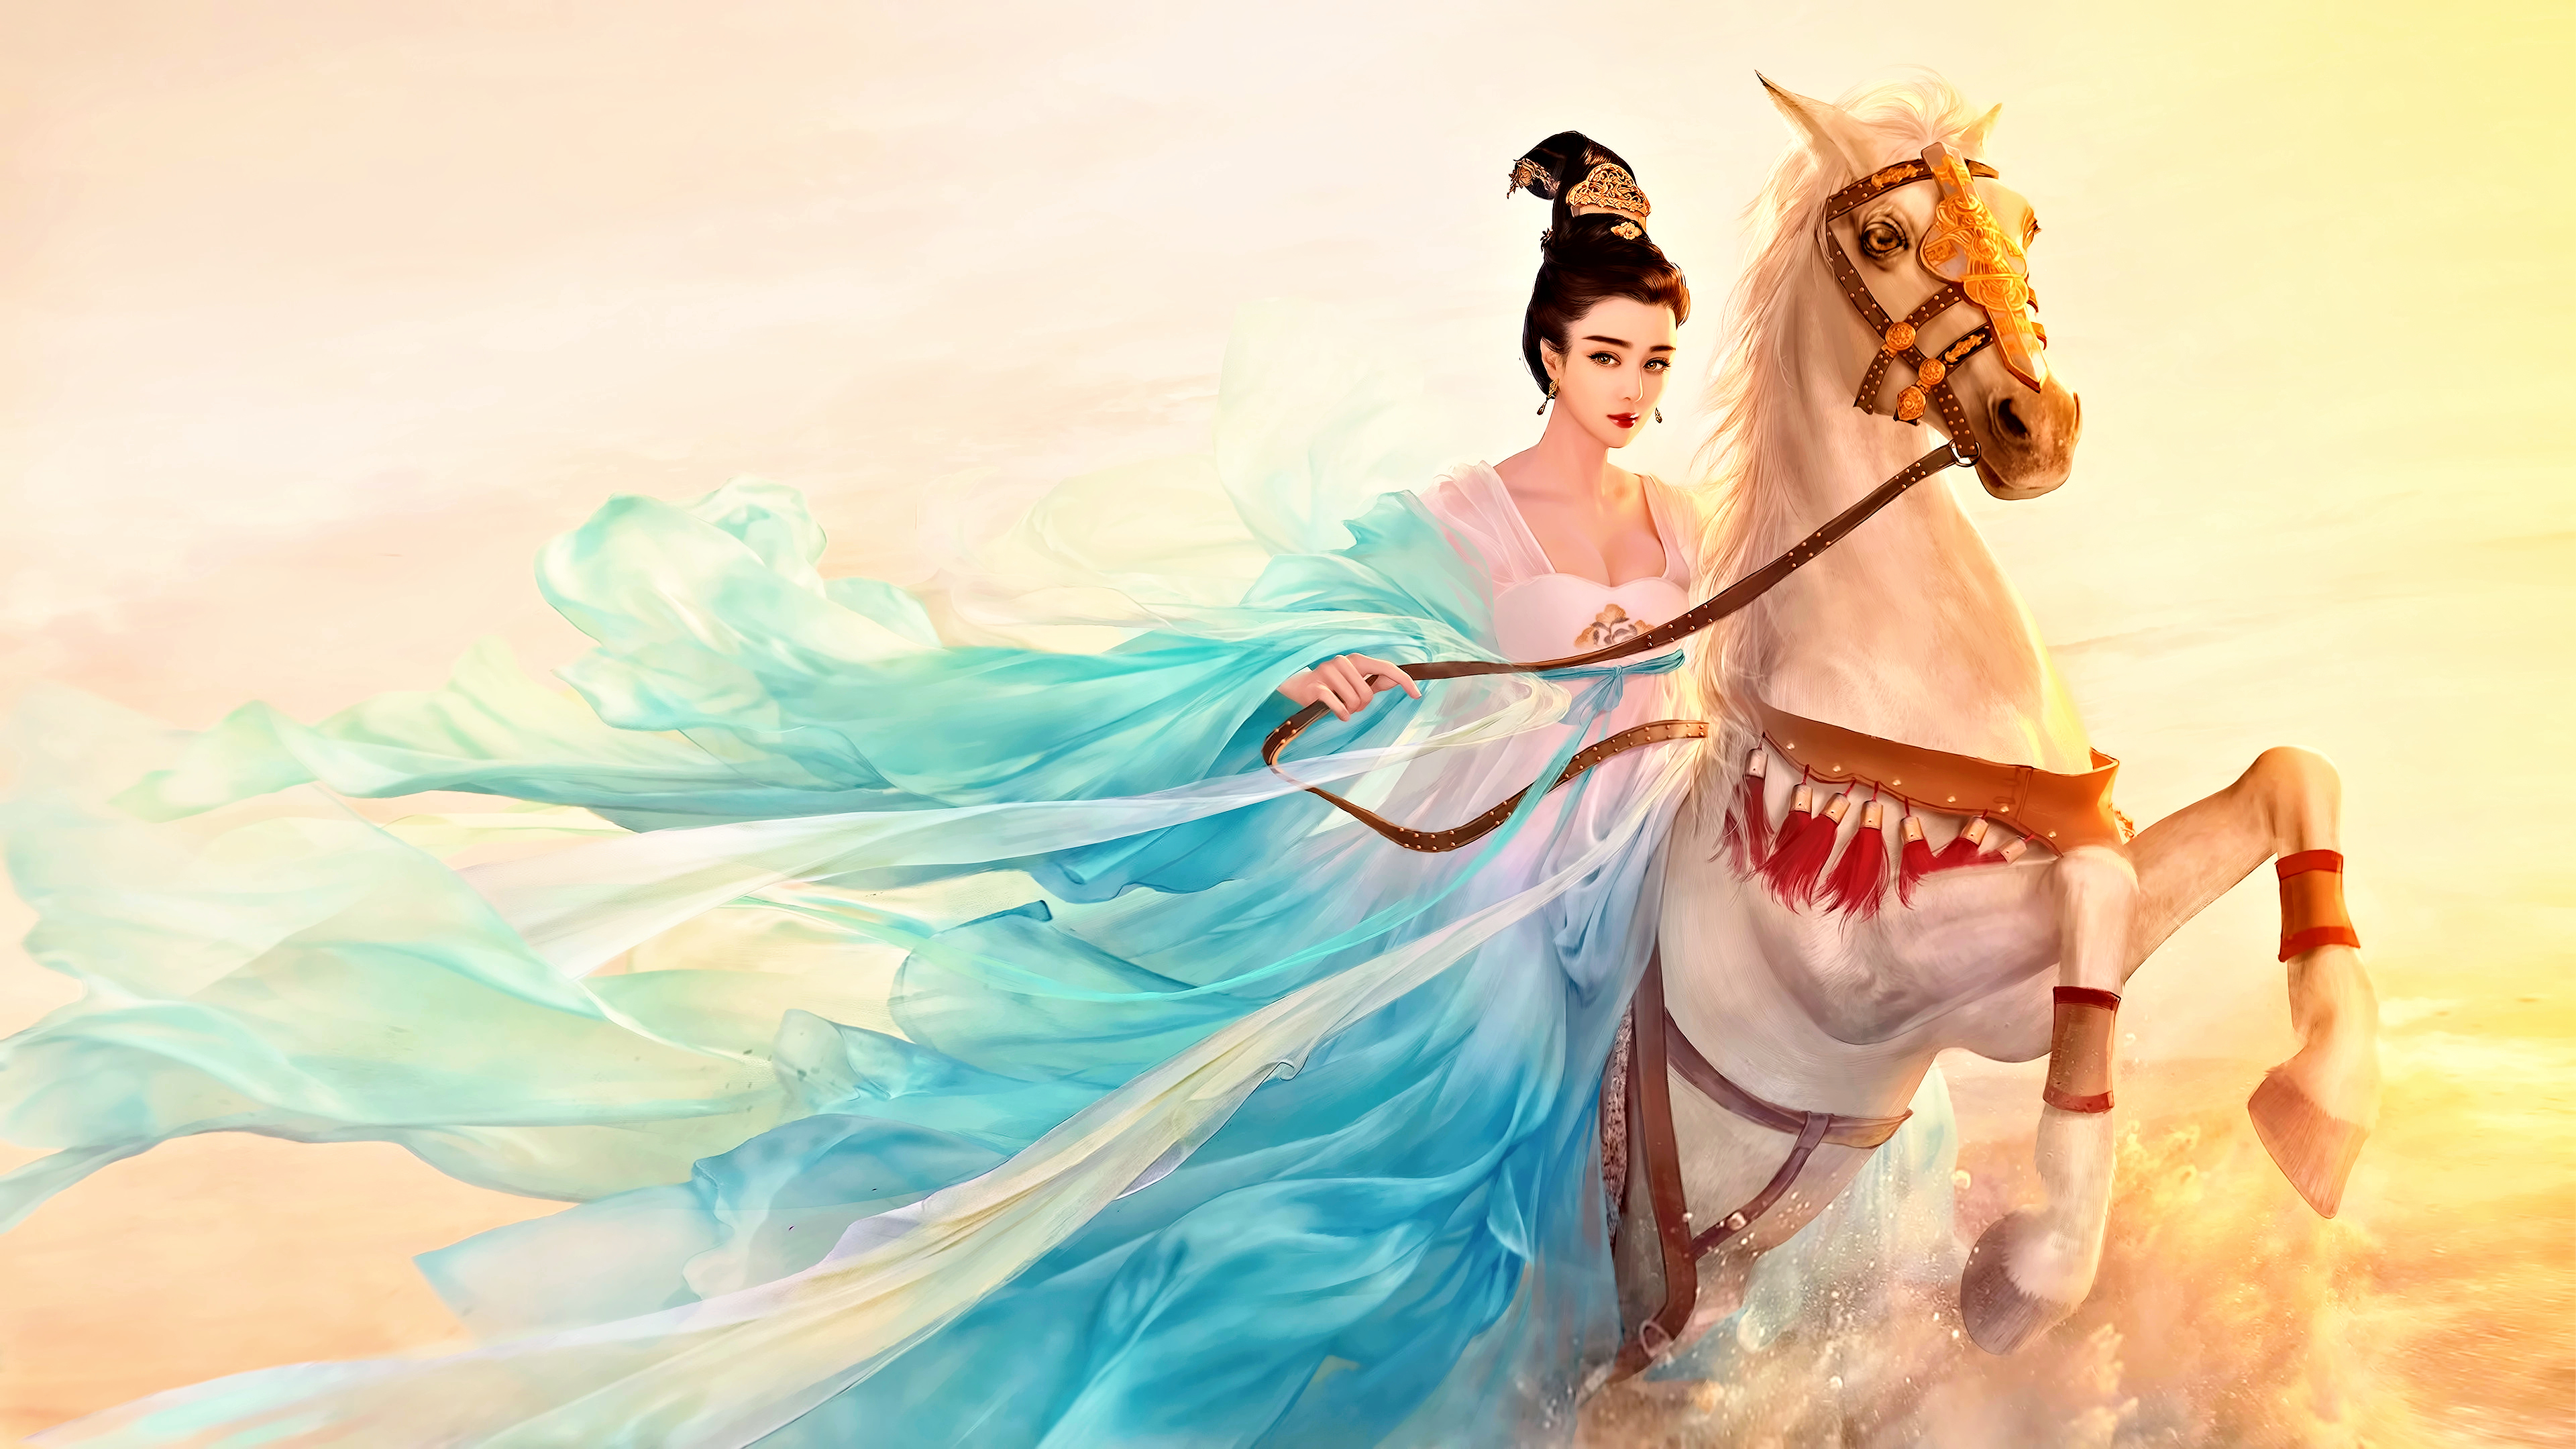 General 3840x2160 digital art artwork fantasy art fan art CGI fantasy girl women portrait painting Asian horse